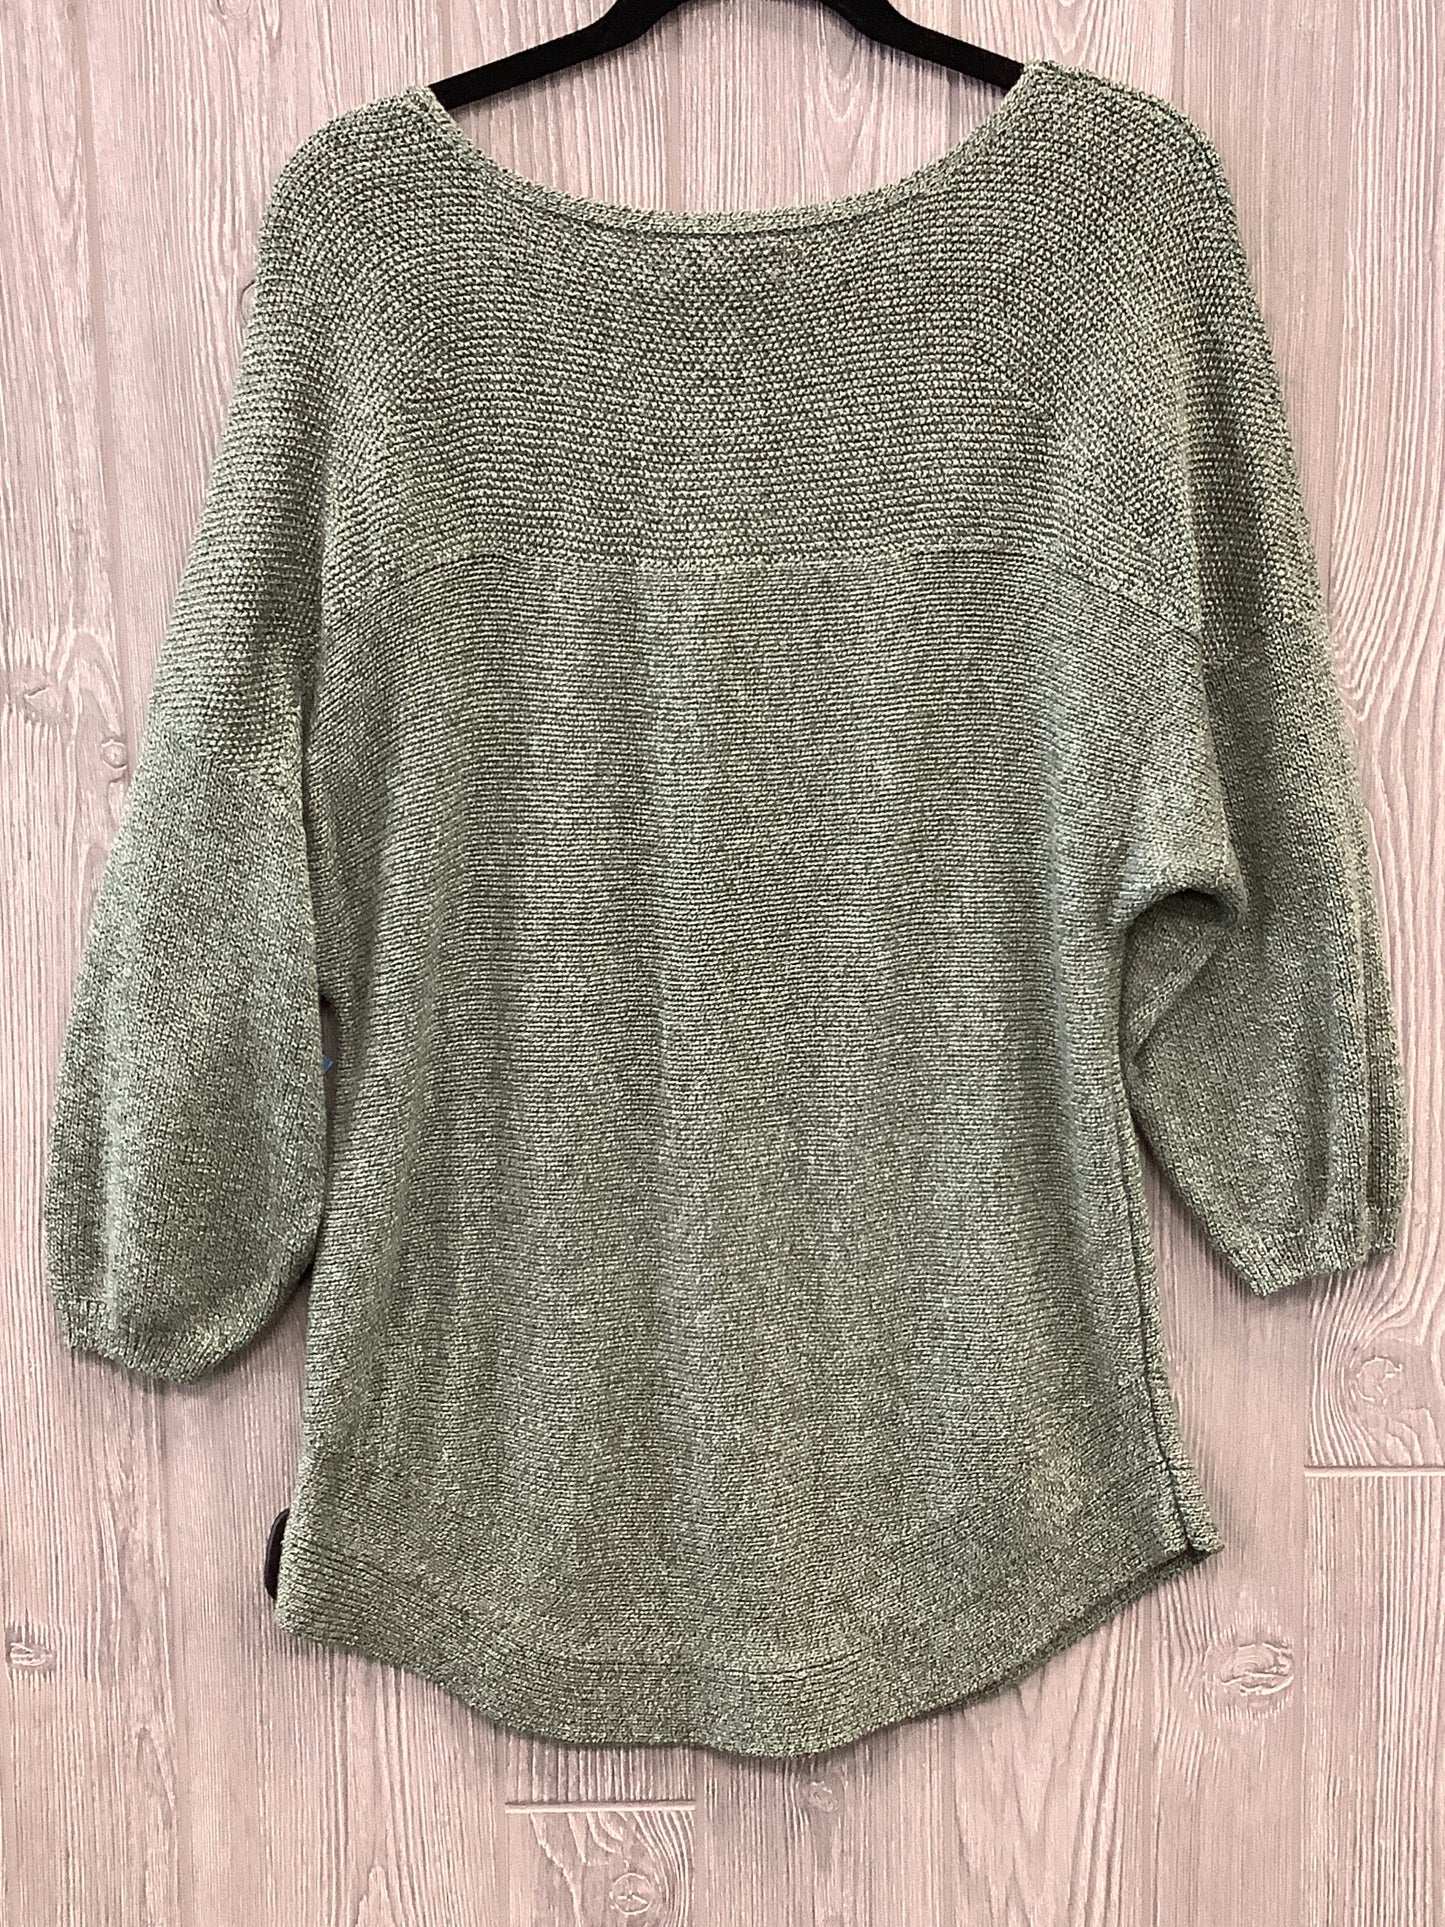 Sweater By Croft And Barrow  Size: Xxl